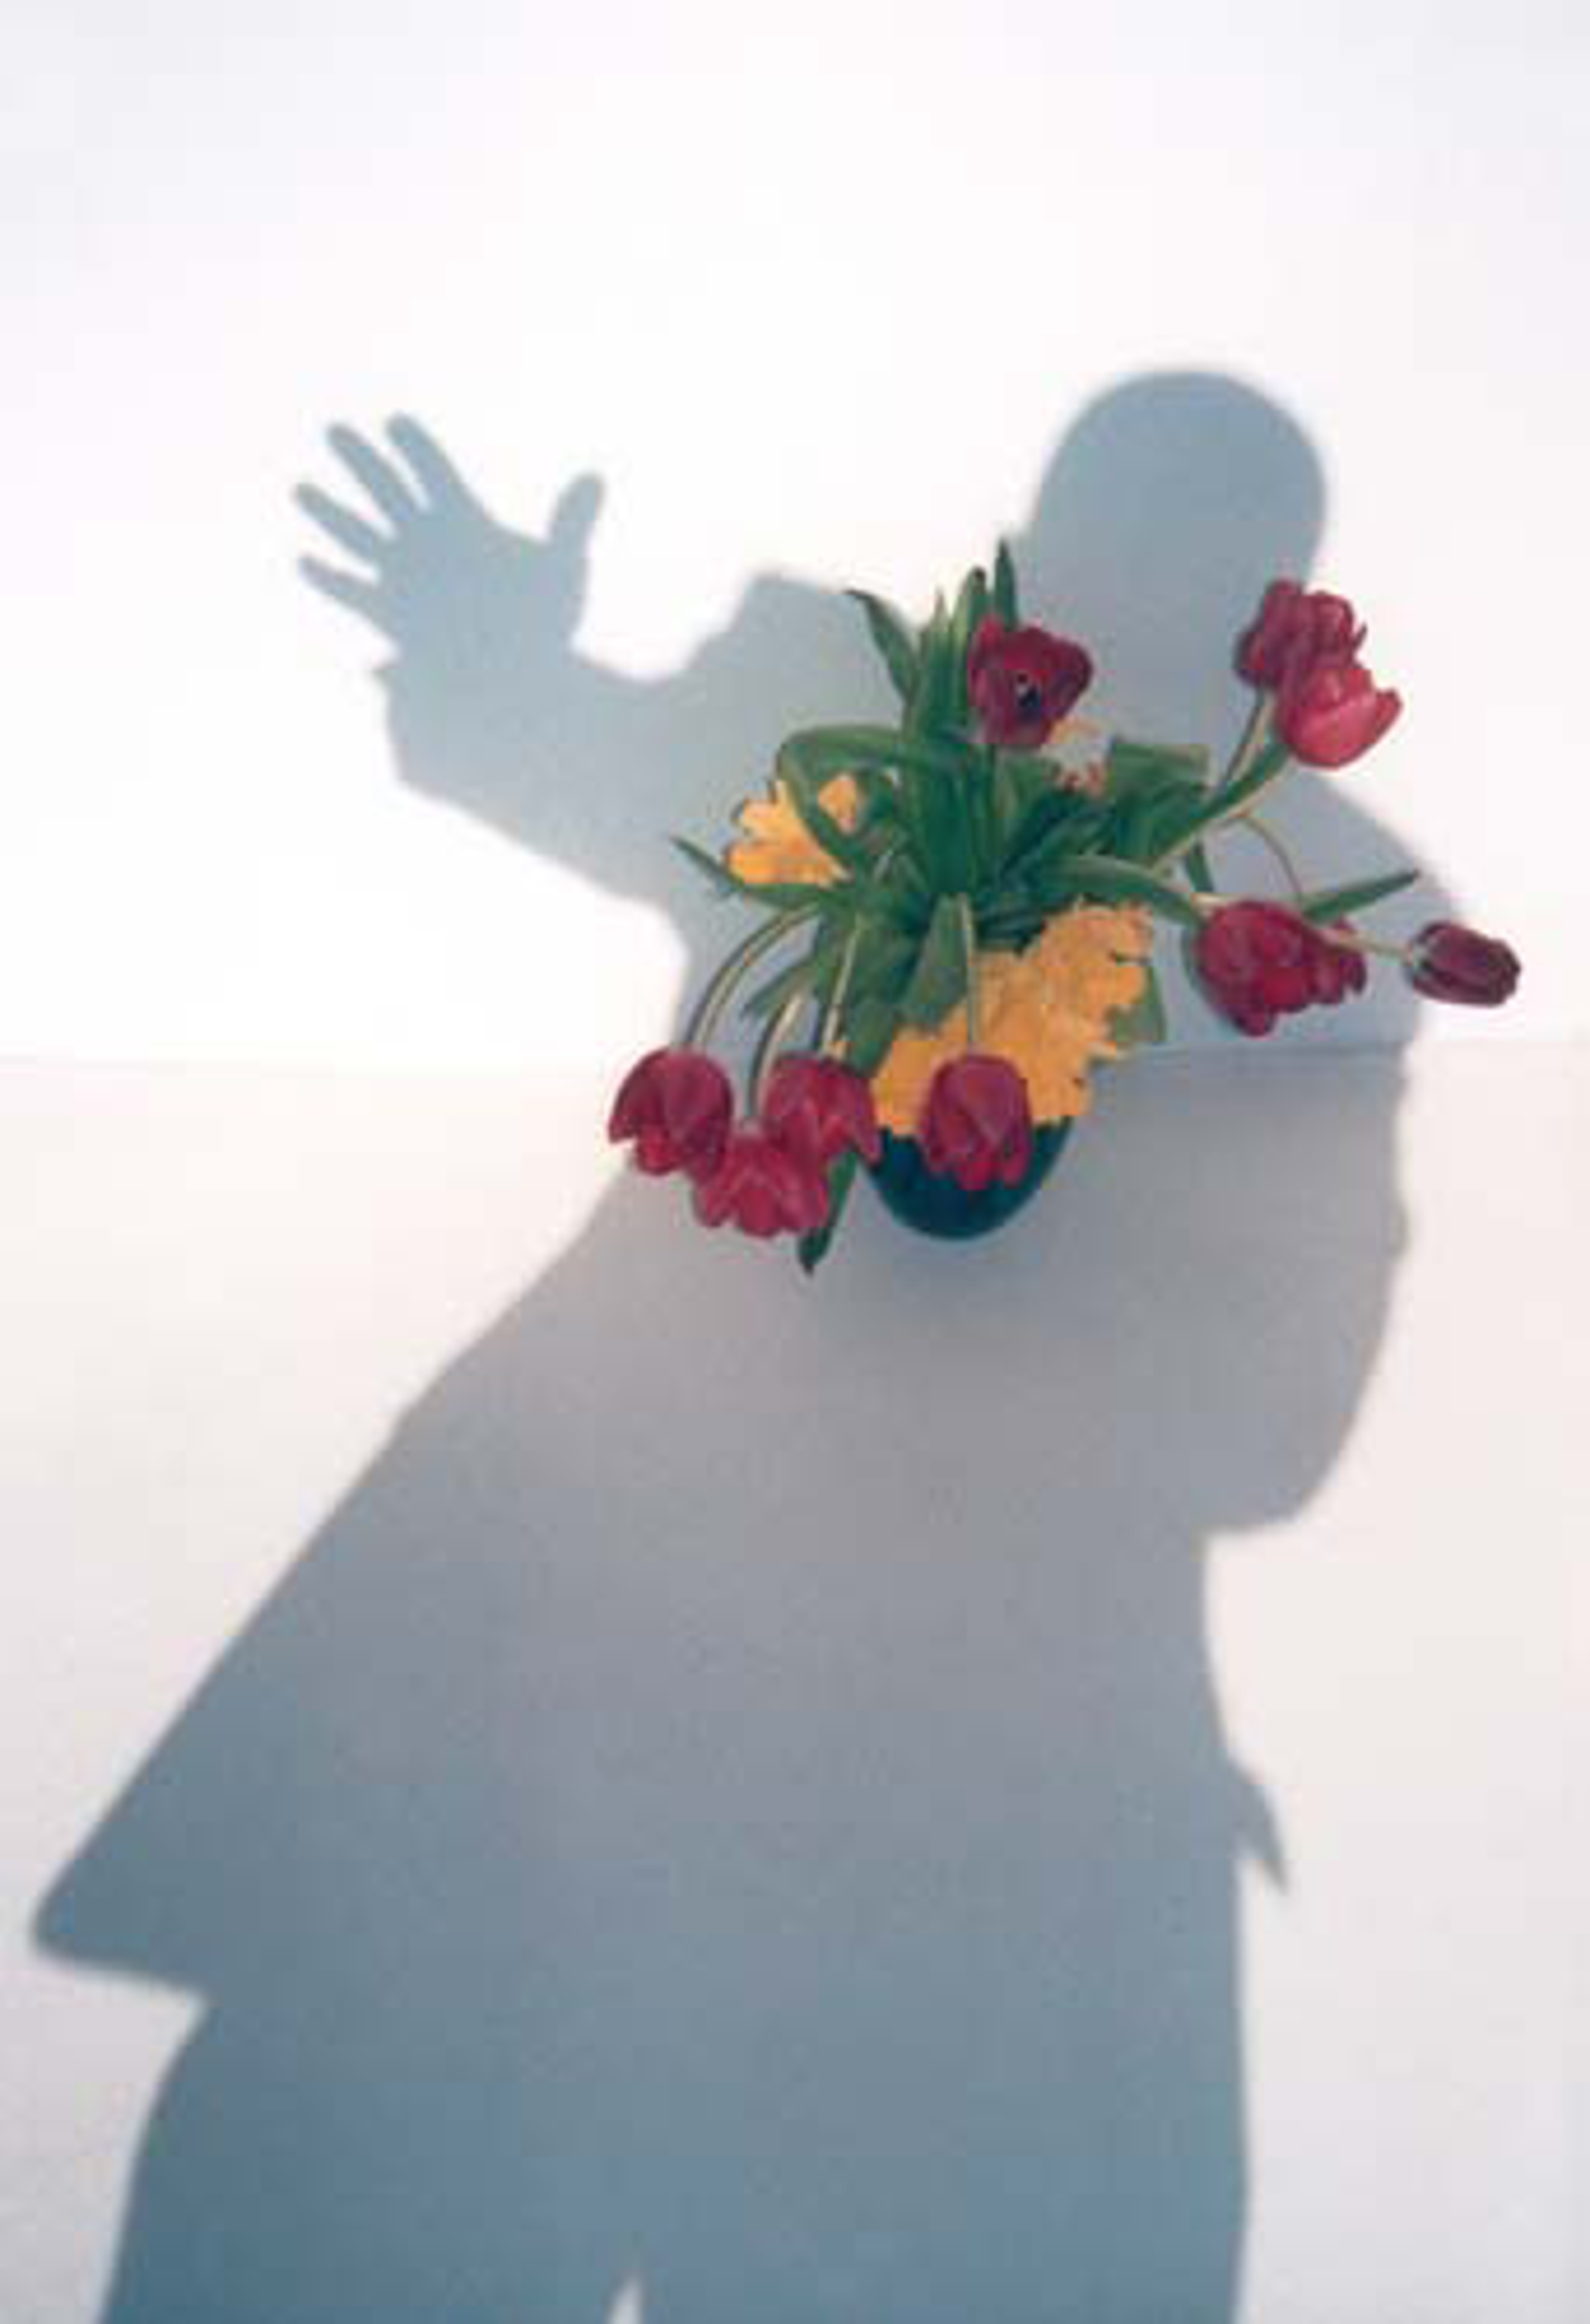 Self-Portrait Shadow Series - "Take My Hand, I'm A Stranger in Paradise" by David Barnett